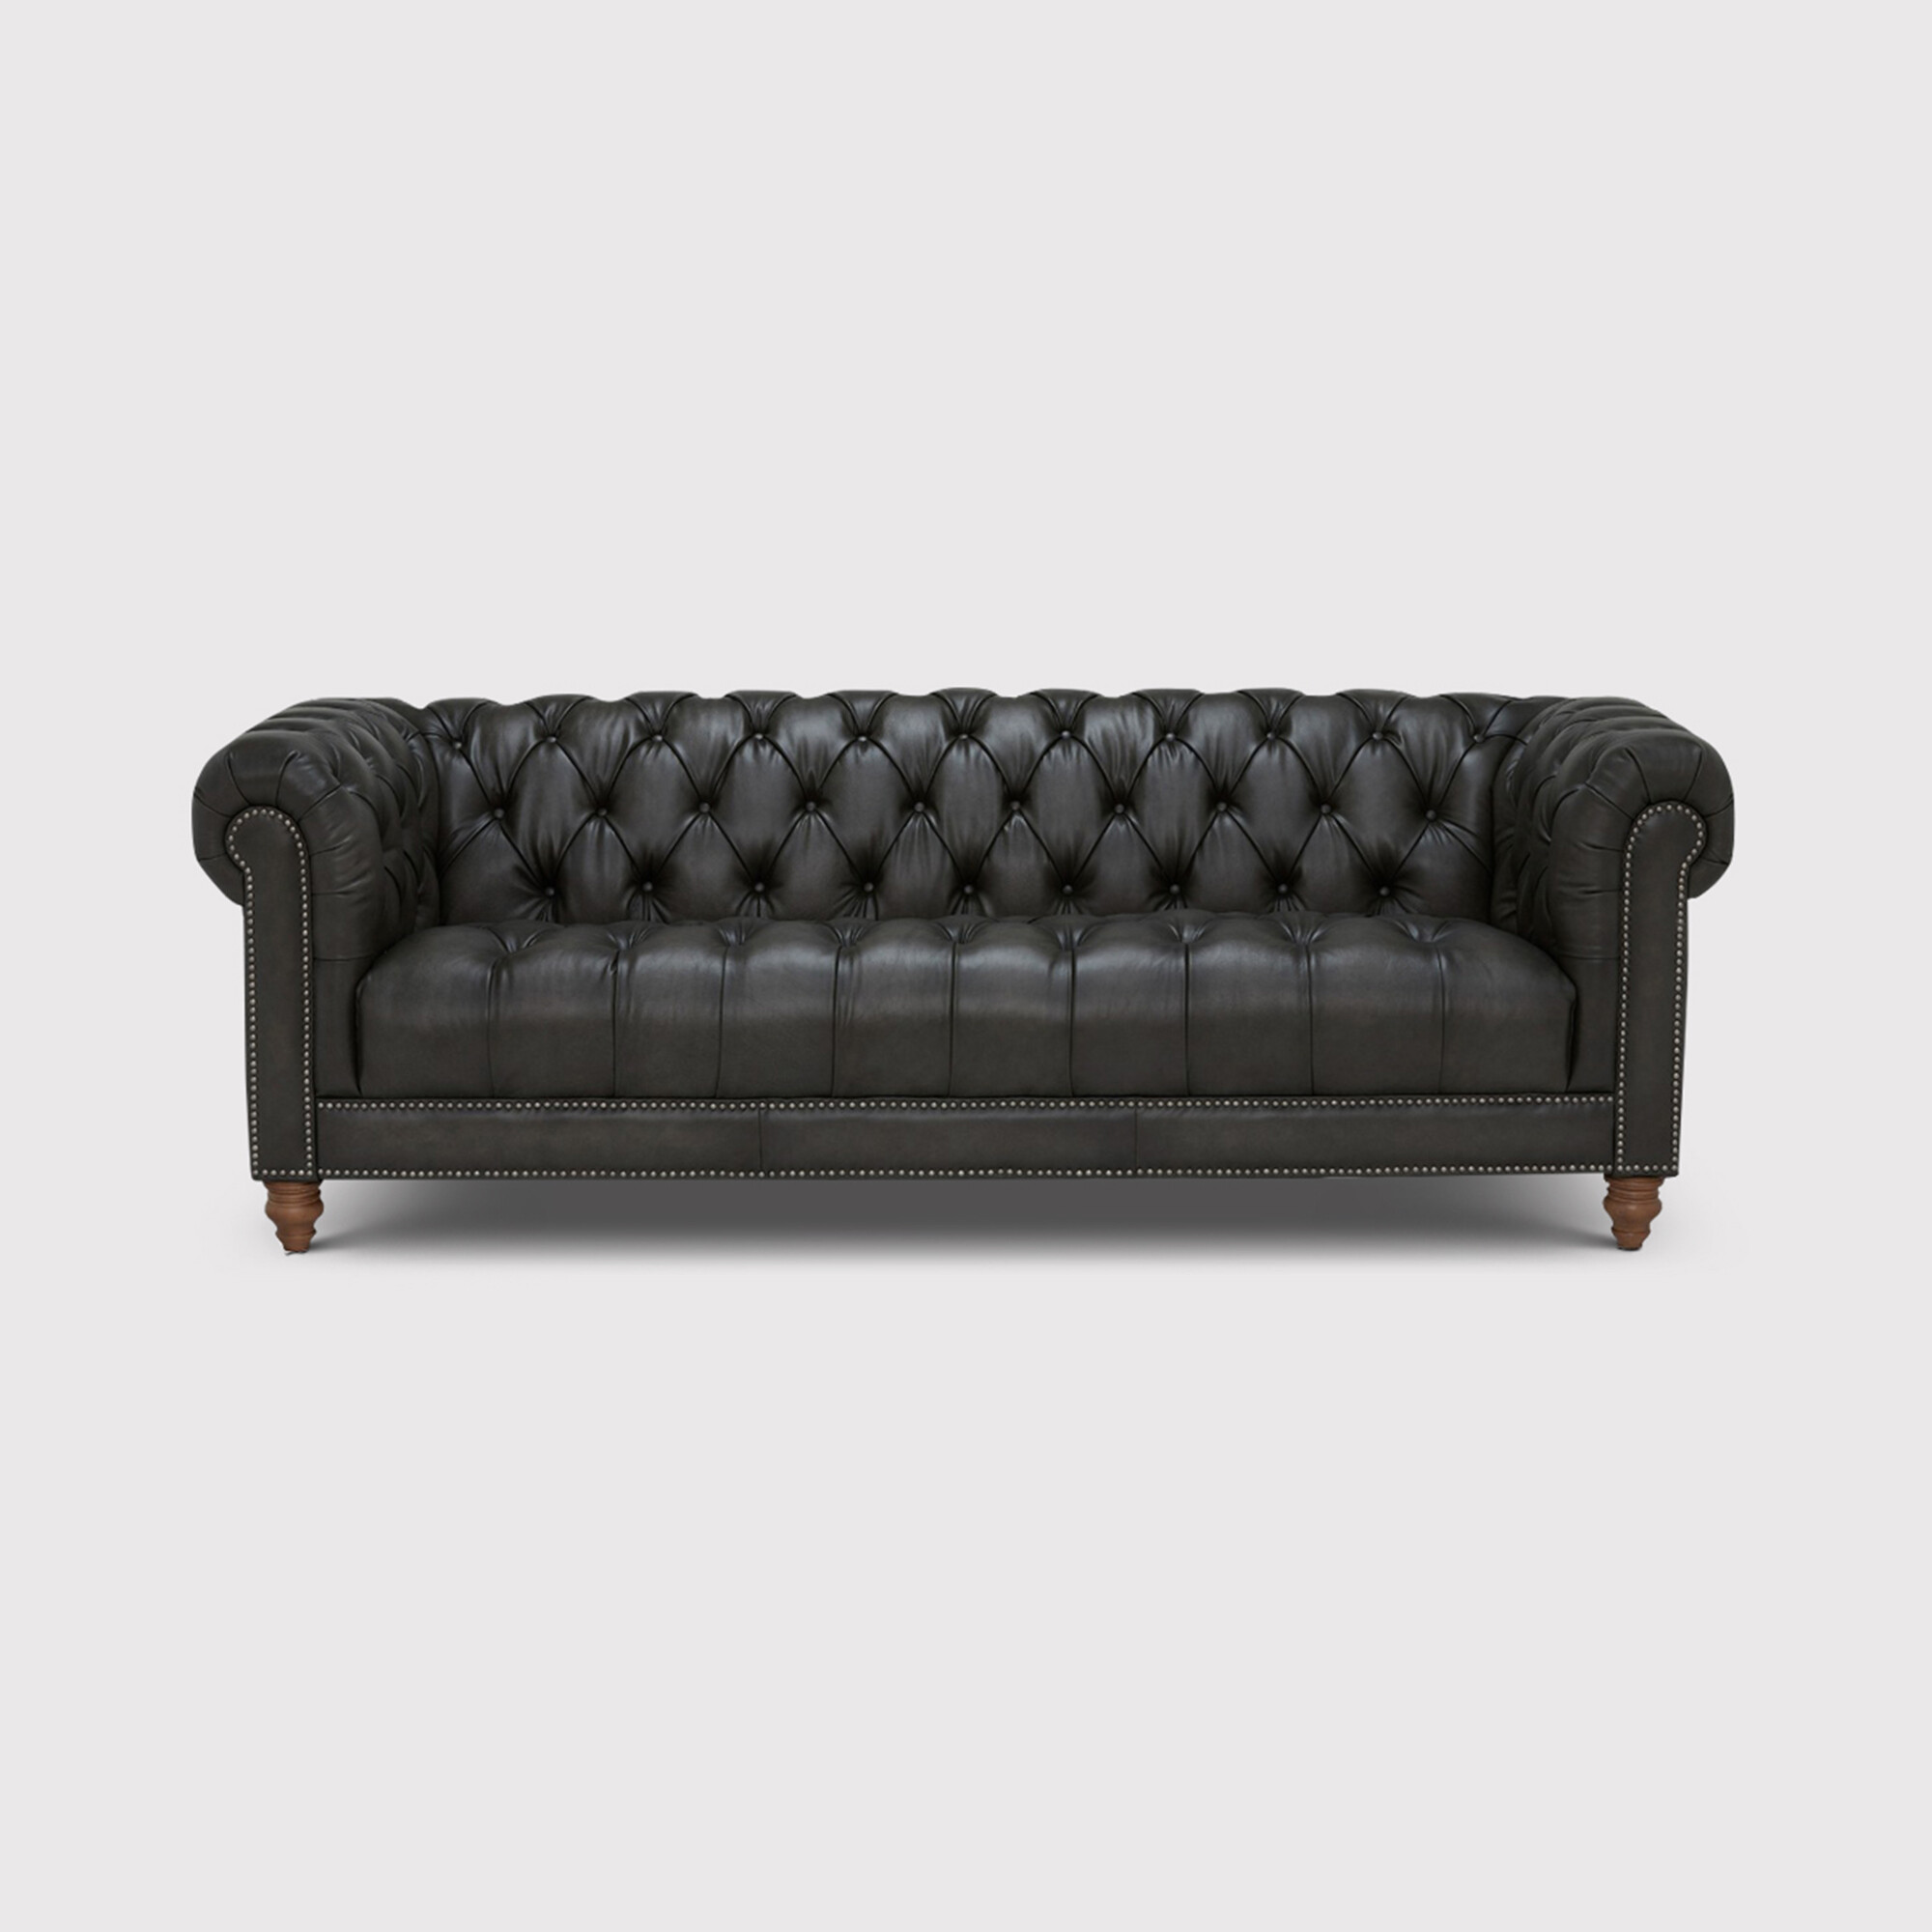 Ullswater 4 Seater Leather Chesterfield Sofa, Black | Barker & Stonehouse